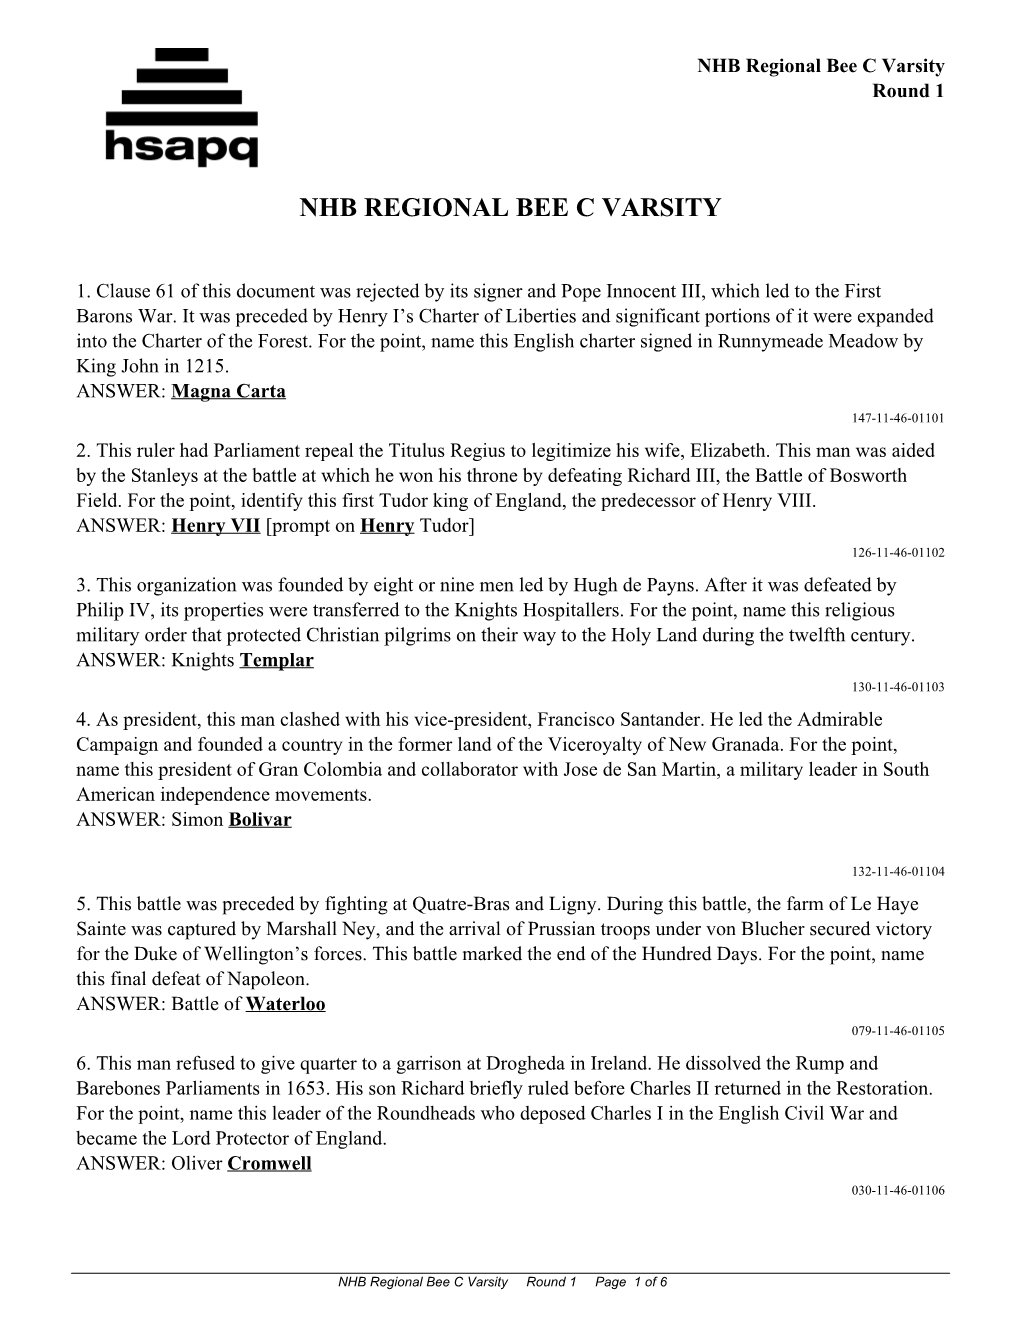 NHB Regional Bee C Varsity Round #1